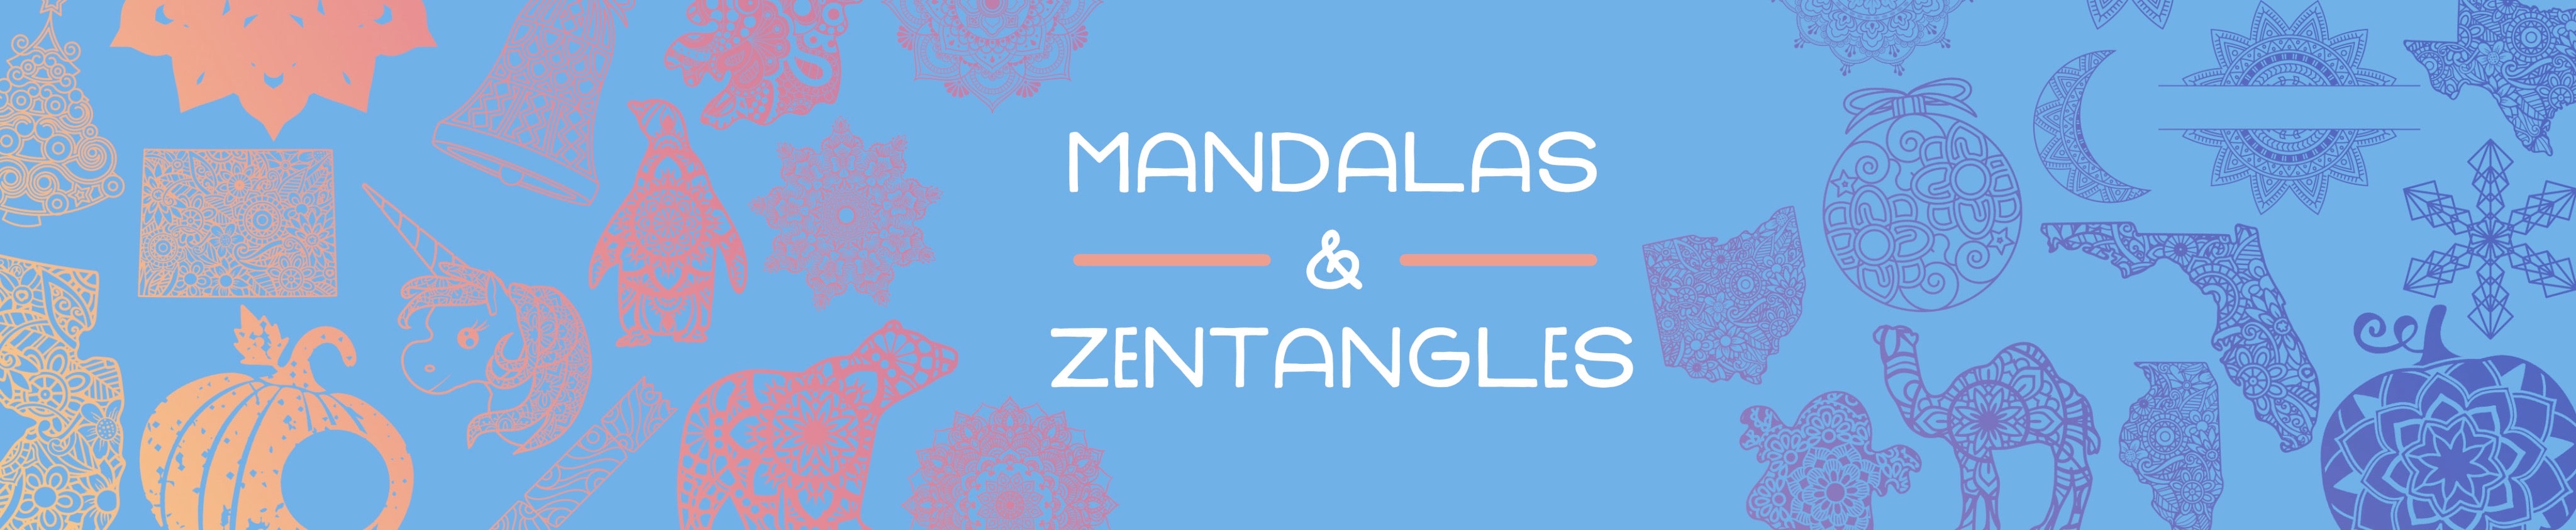 Commercial Free Mandala SVG Designs